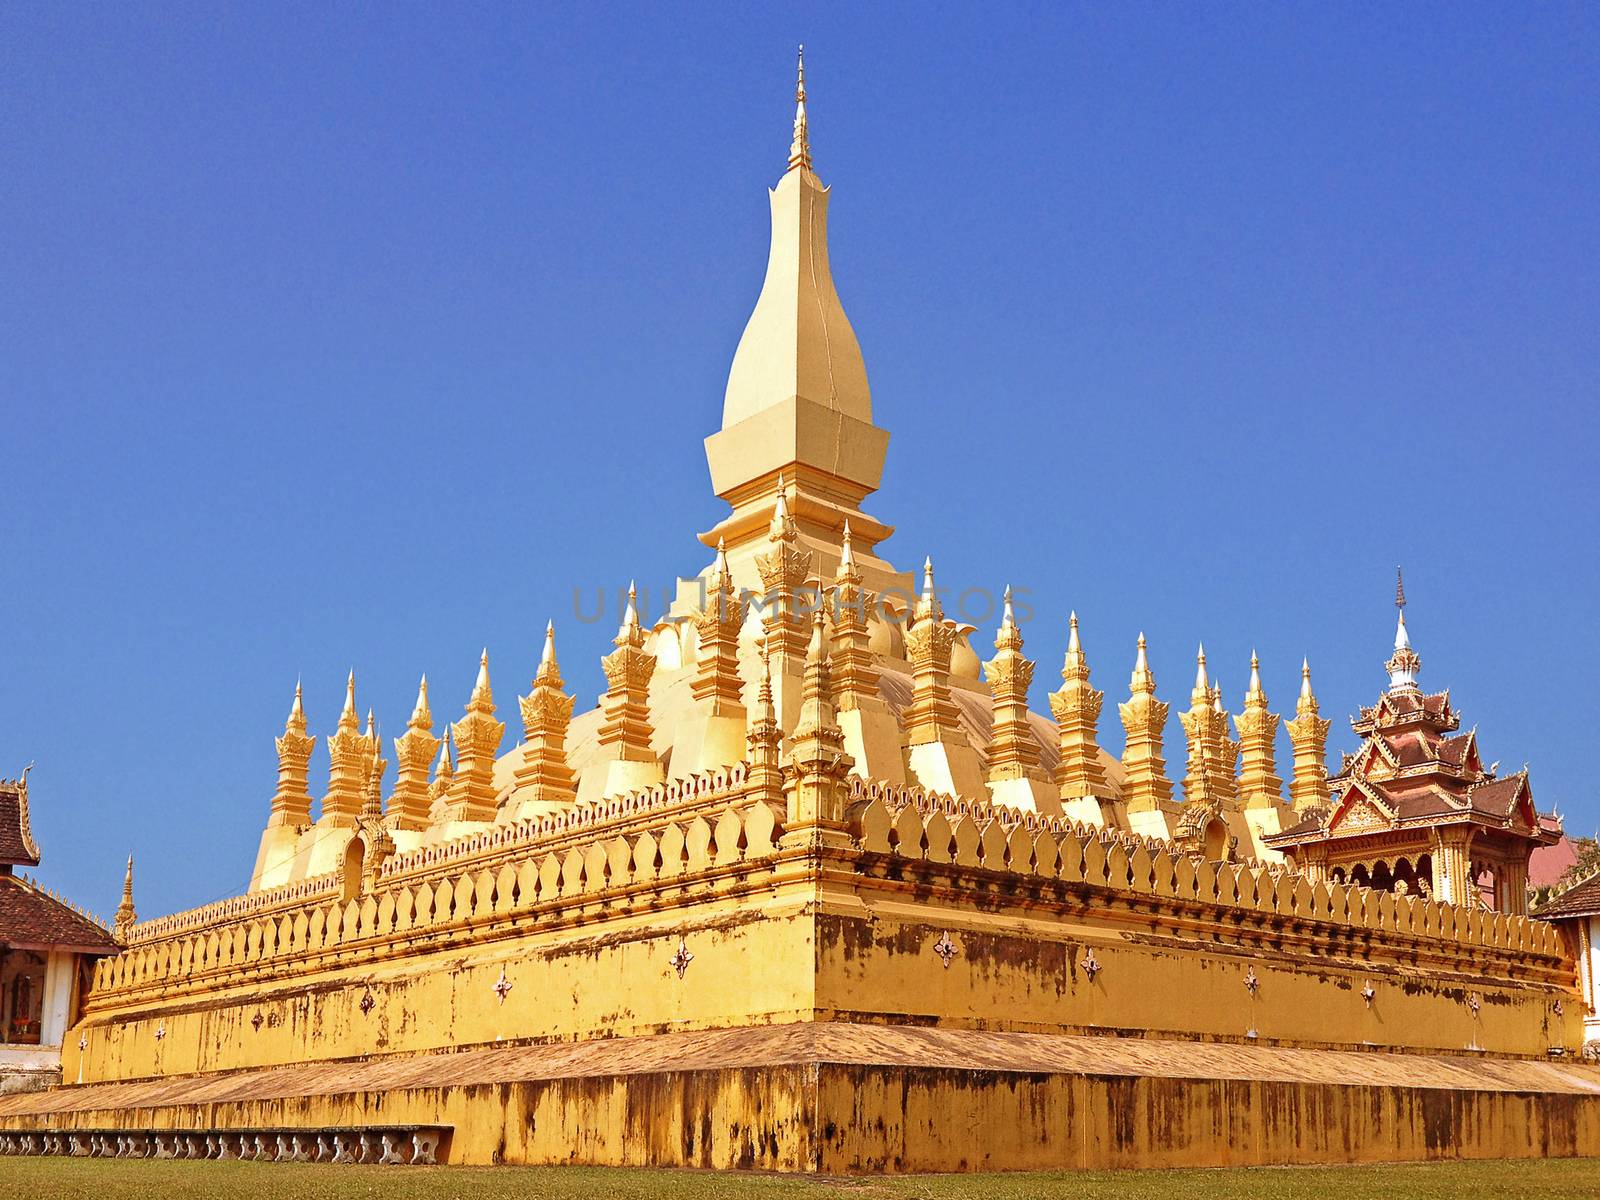 Wat Pha-That Luang (National temple of Laos), Vientiane,Laos.